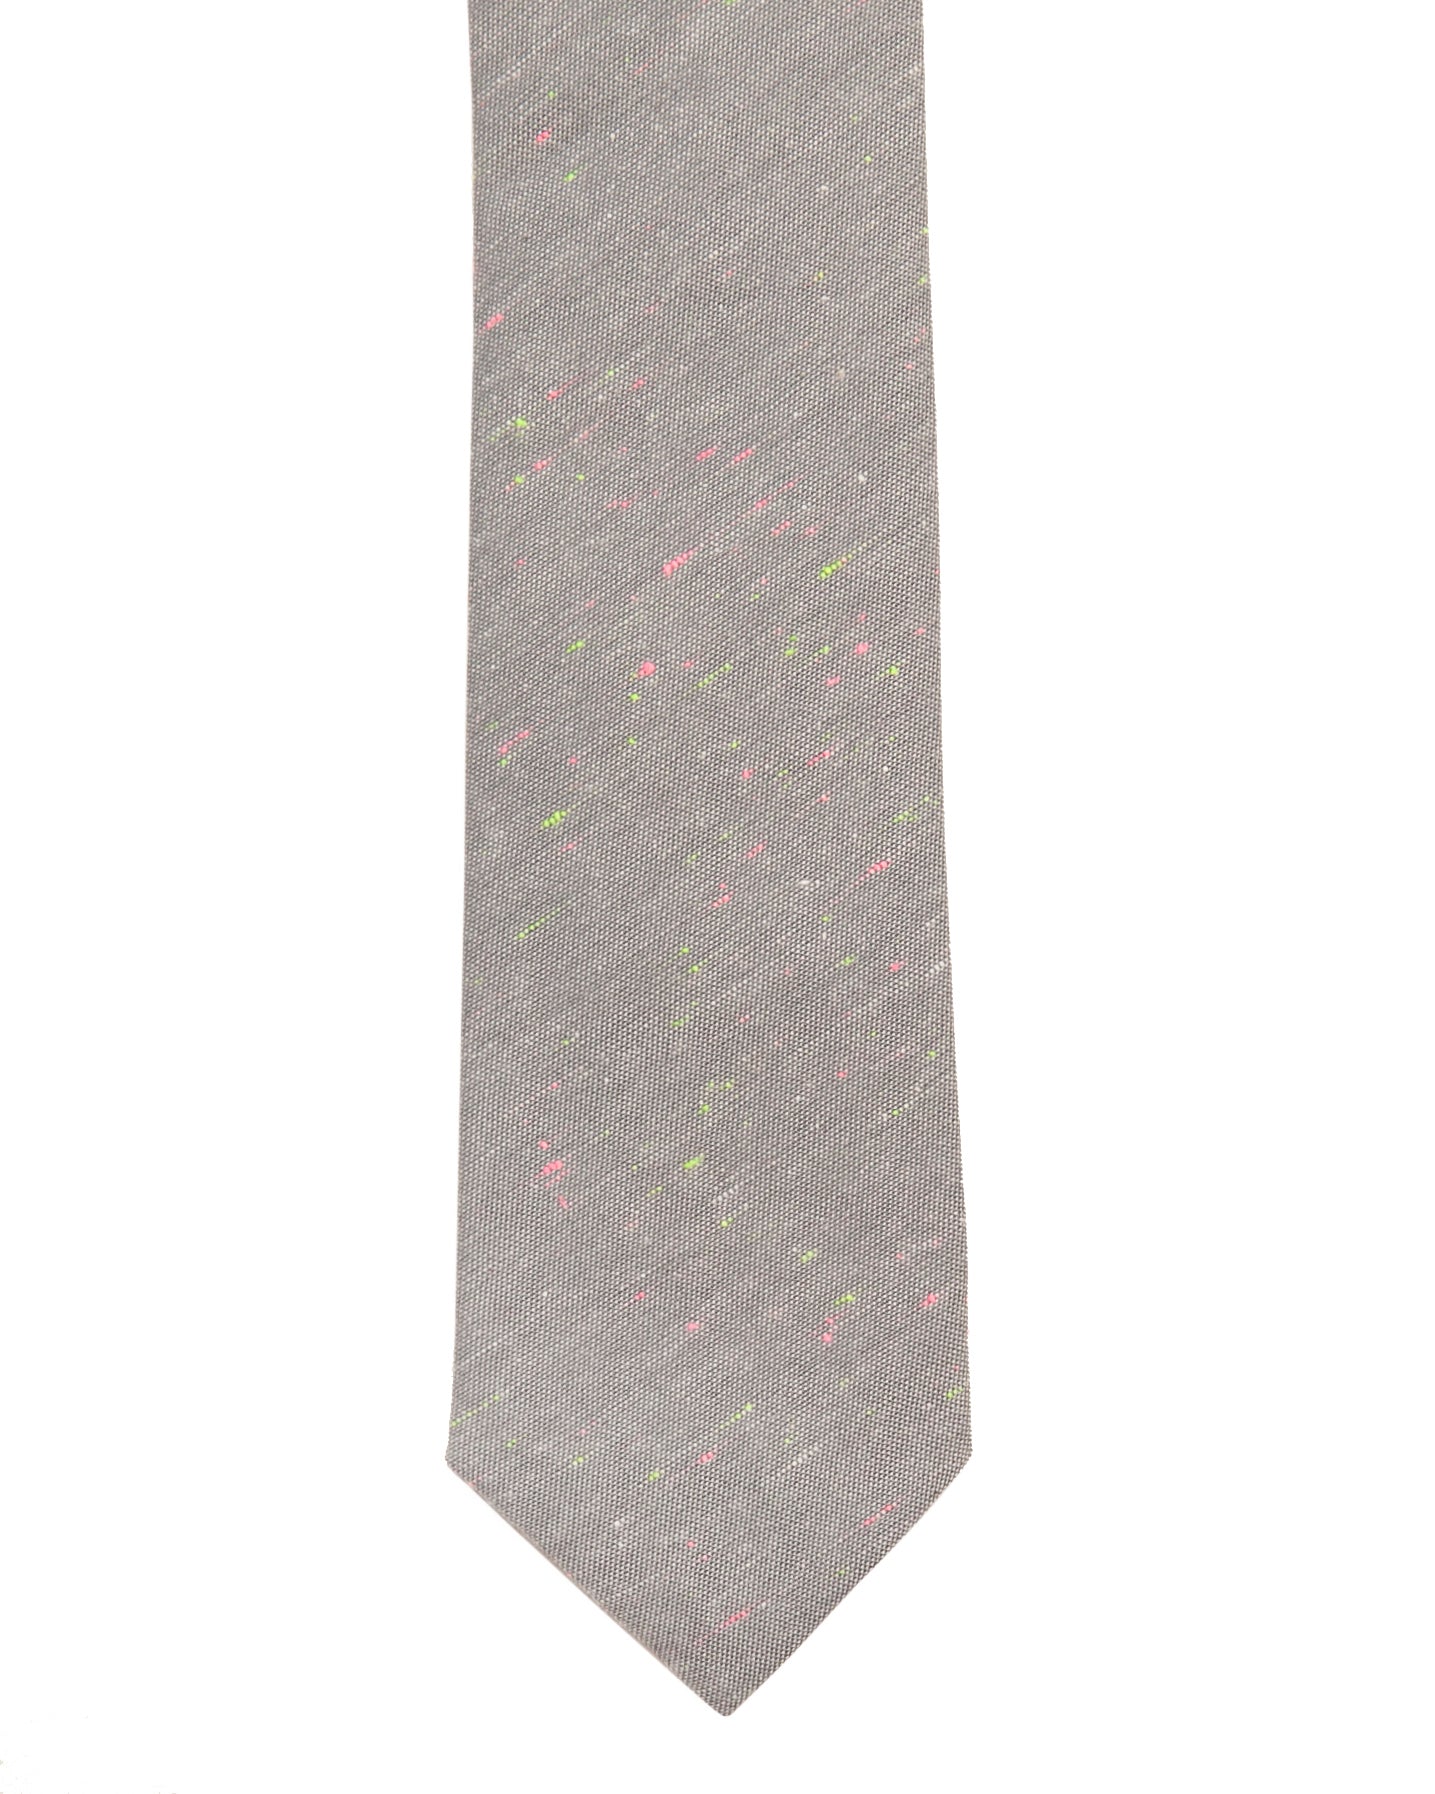 The Tie | Chambray Flecks (Grey)